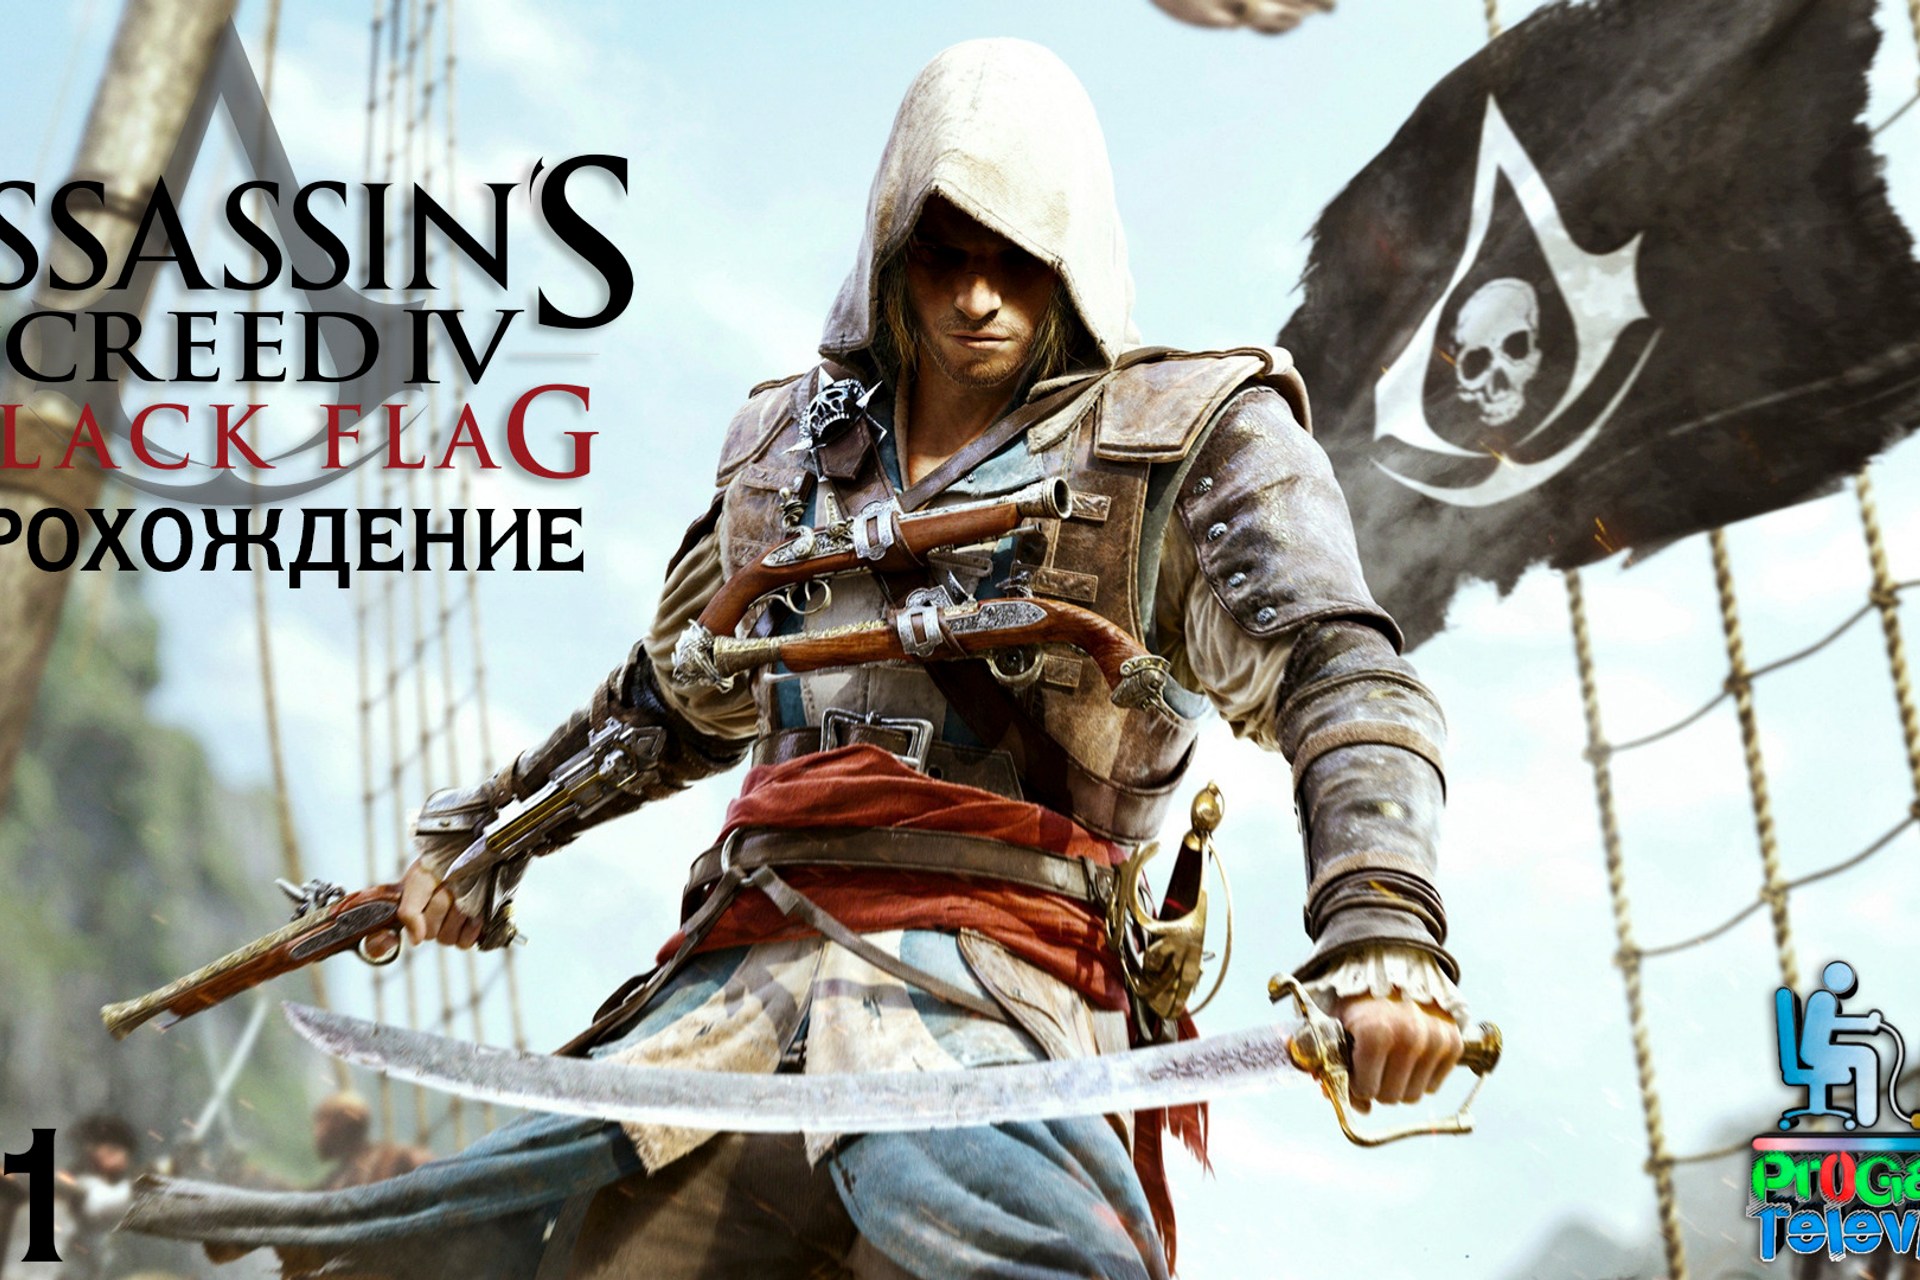 Assassin's Creed IV Black Flag. 502 44 Assassins Creed 4 Black Flag. 502 44 Assassins Creed 4 Black. Сохранения для assassins